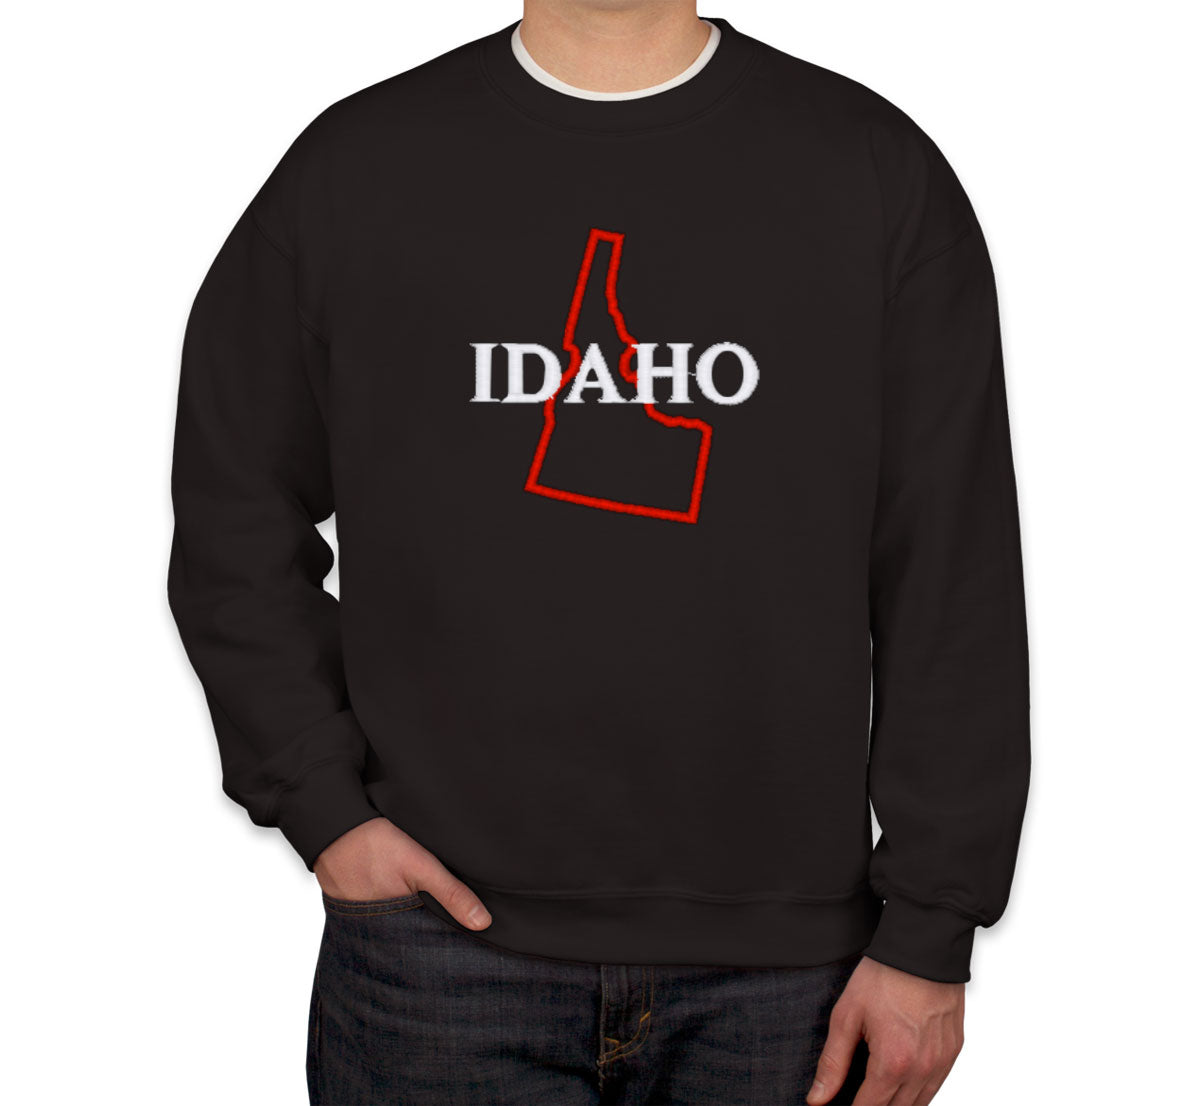 Idaho Embroidered Unisex Sweatshirt